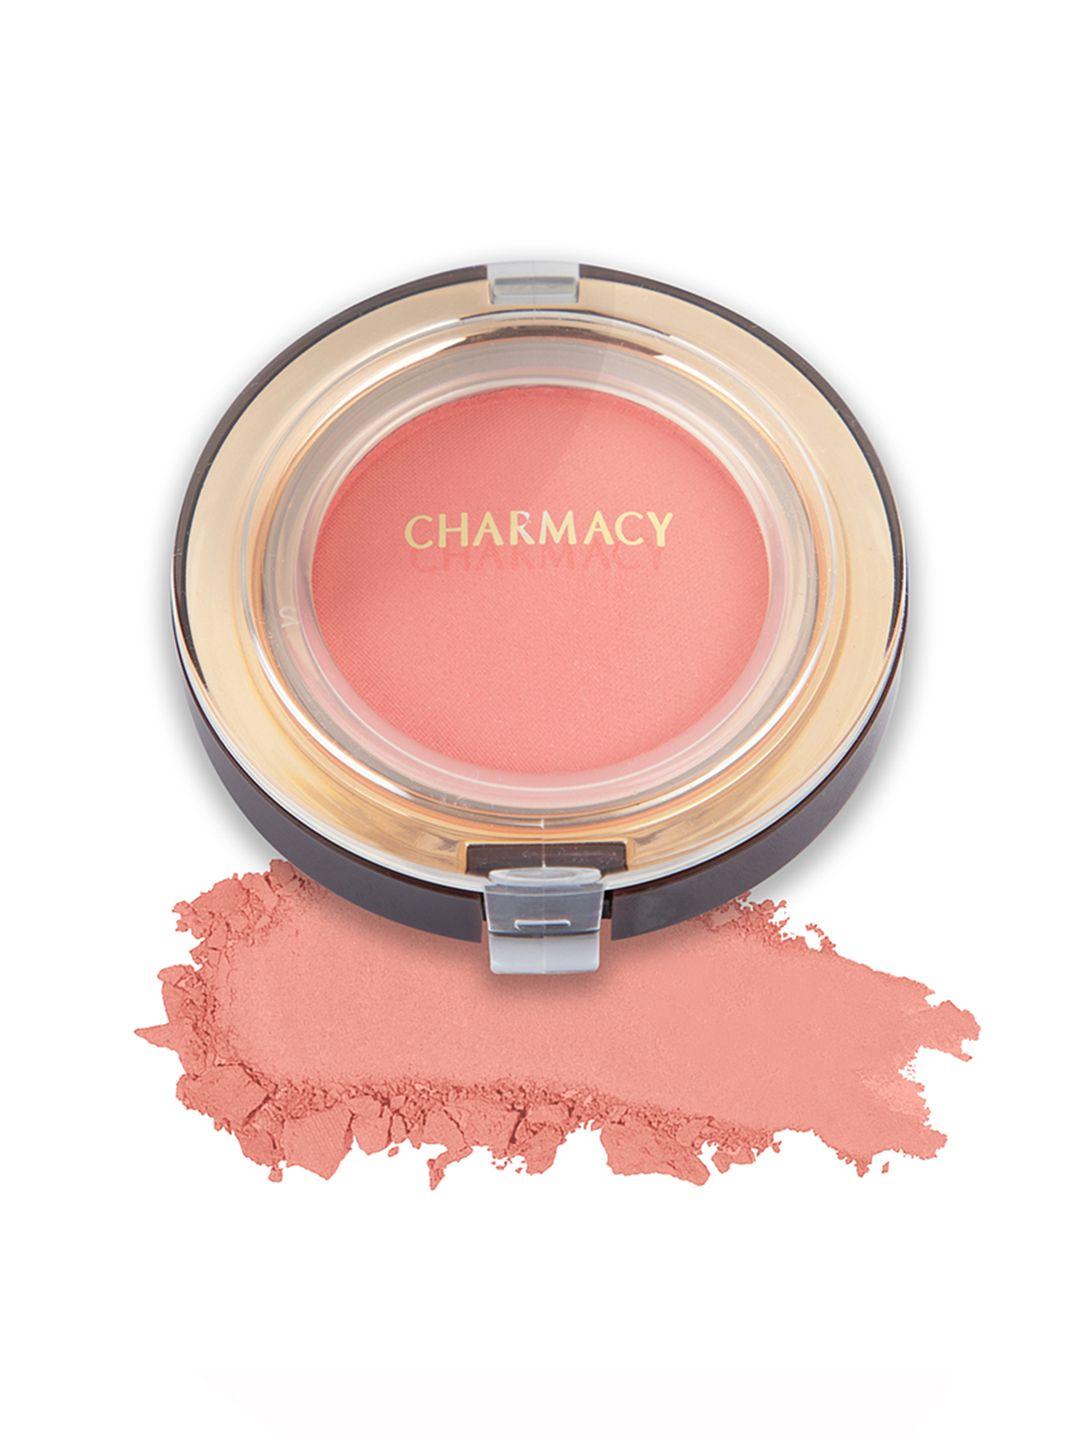 charmacy milano cheek velvet soft vegan toxin-free pressed powder enhancer 4g - pink 01